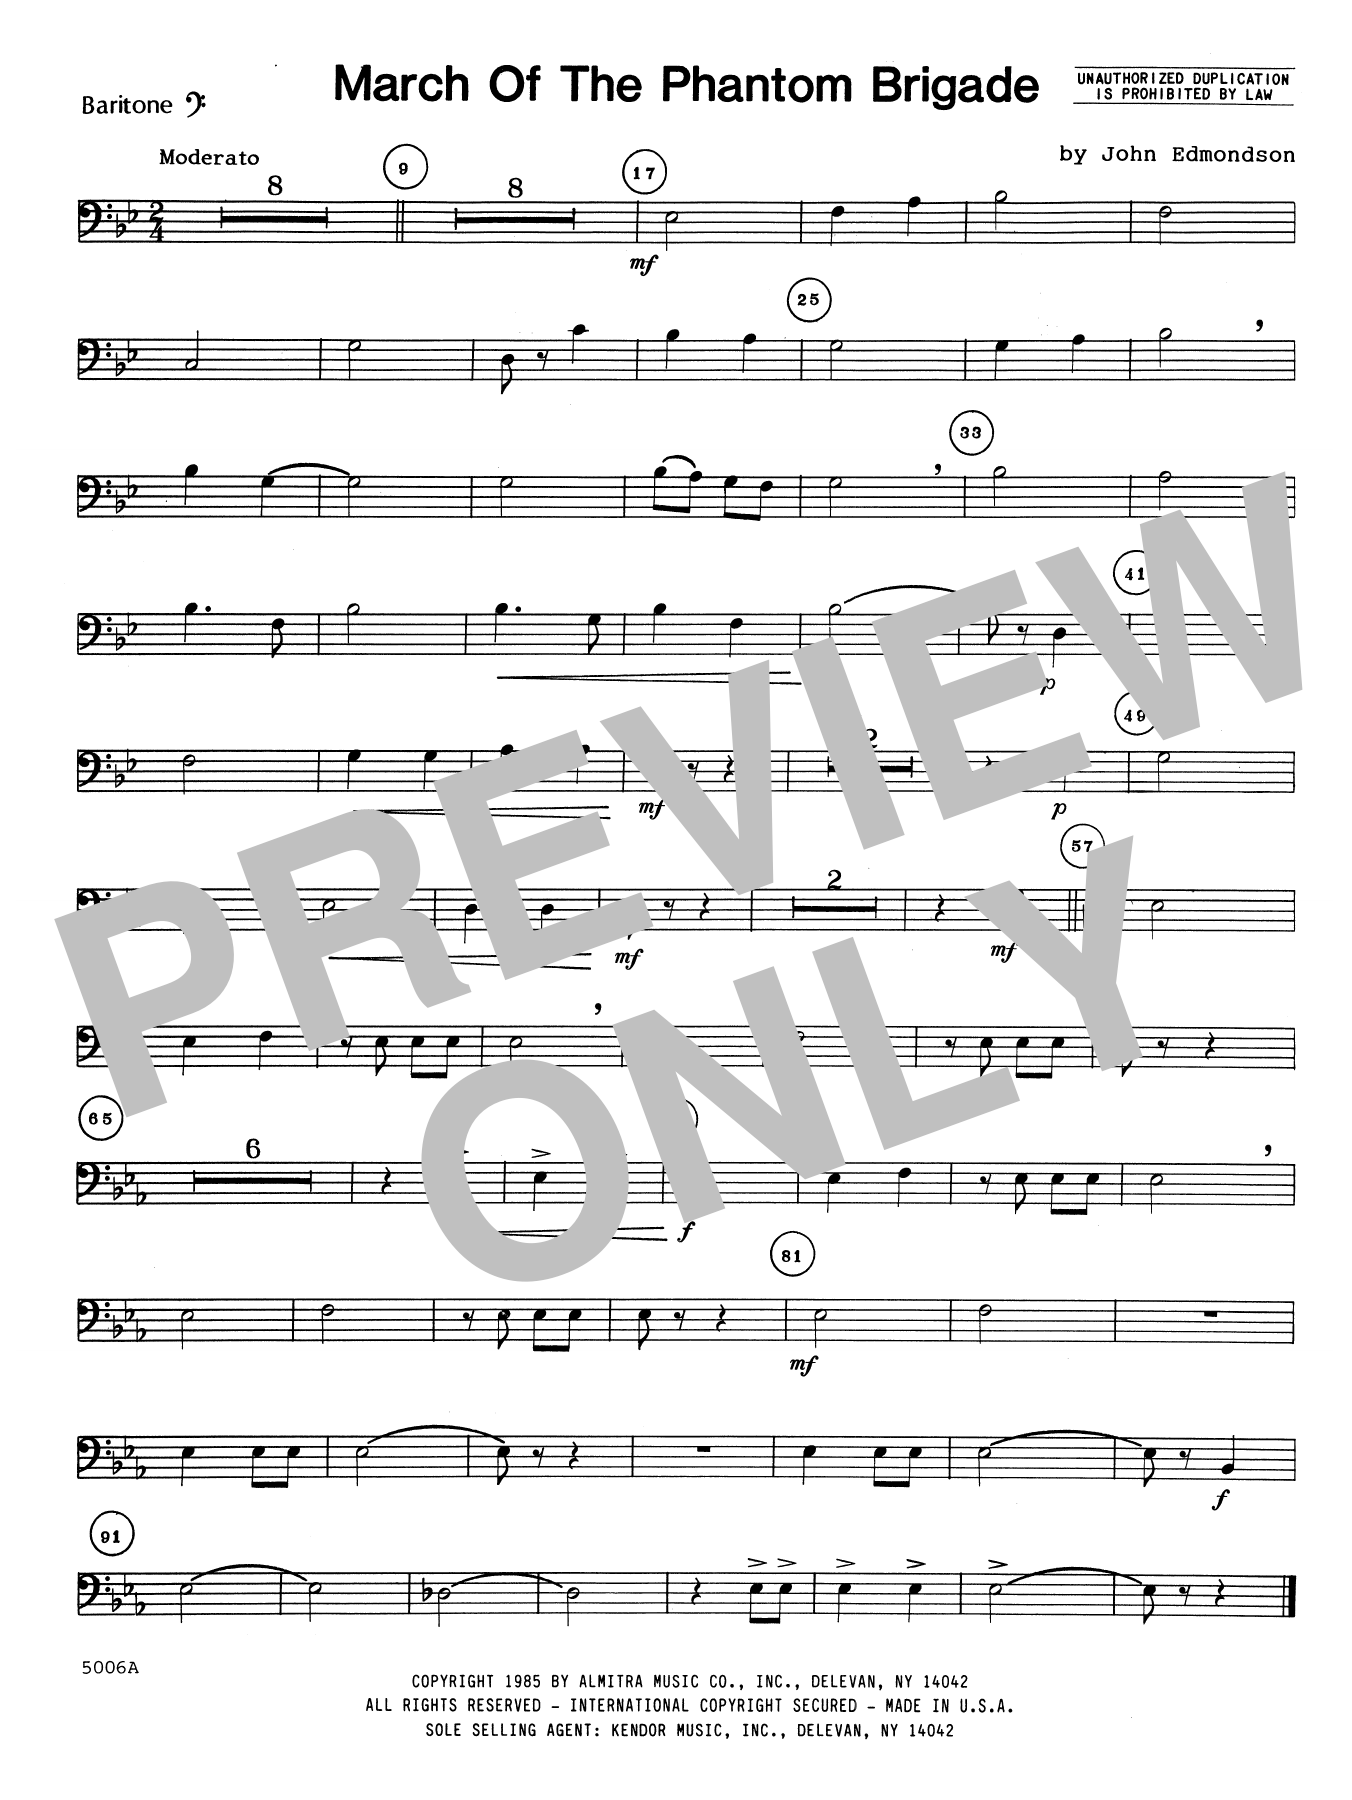 Download John Edmundson March Of The Phantom Brigade - Baritone Sheet Music